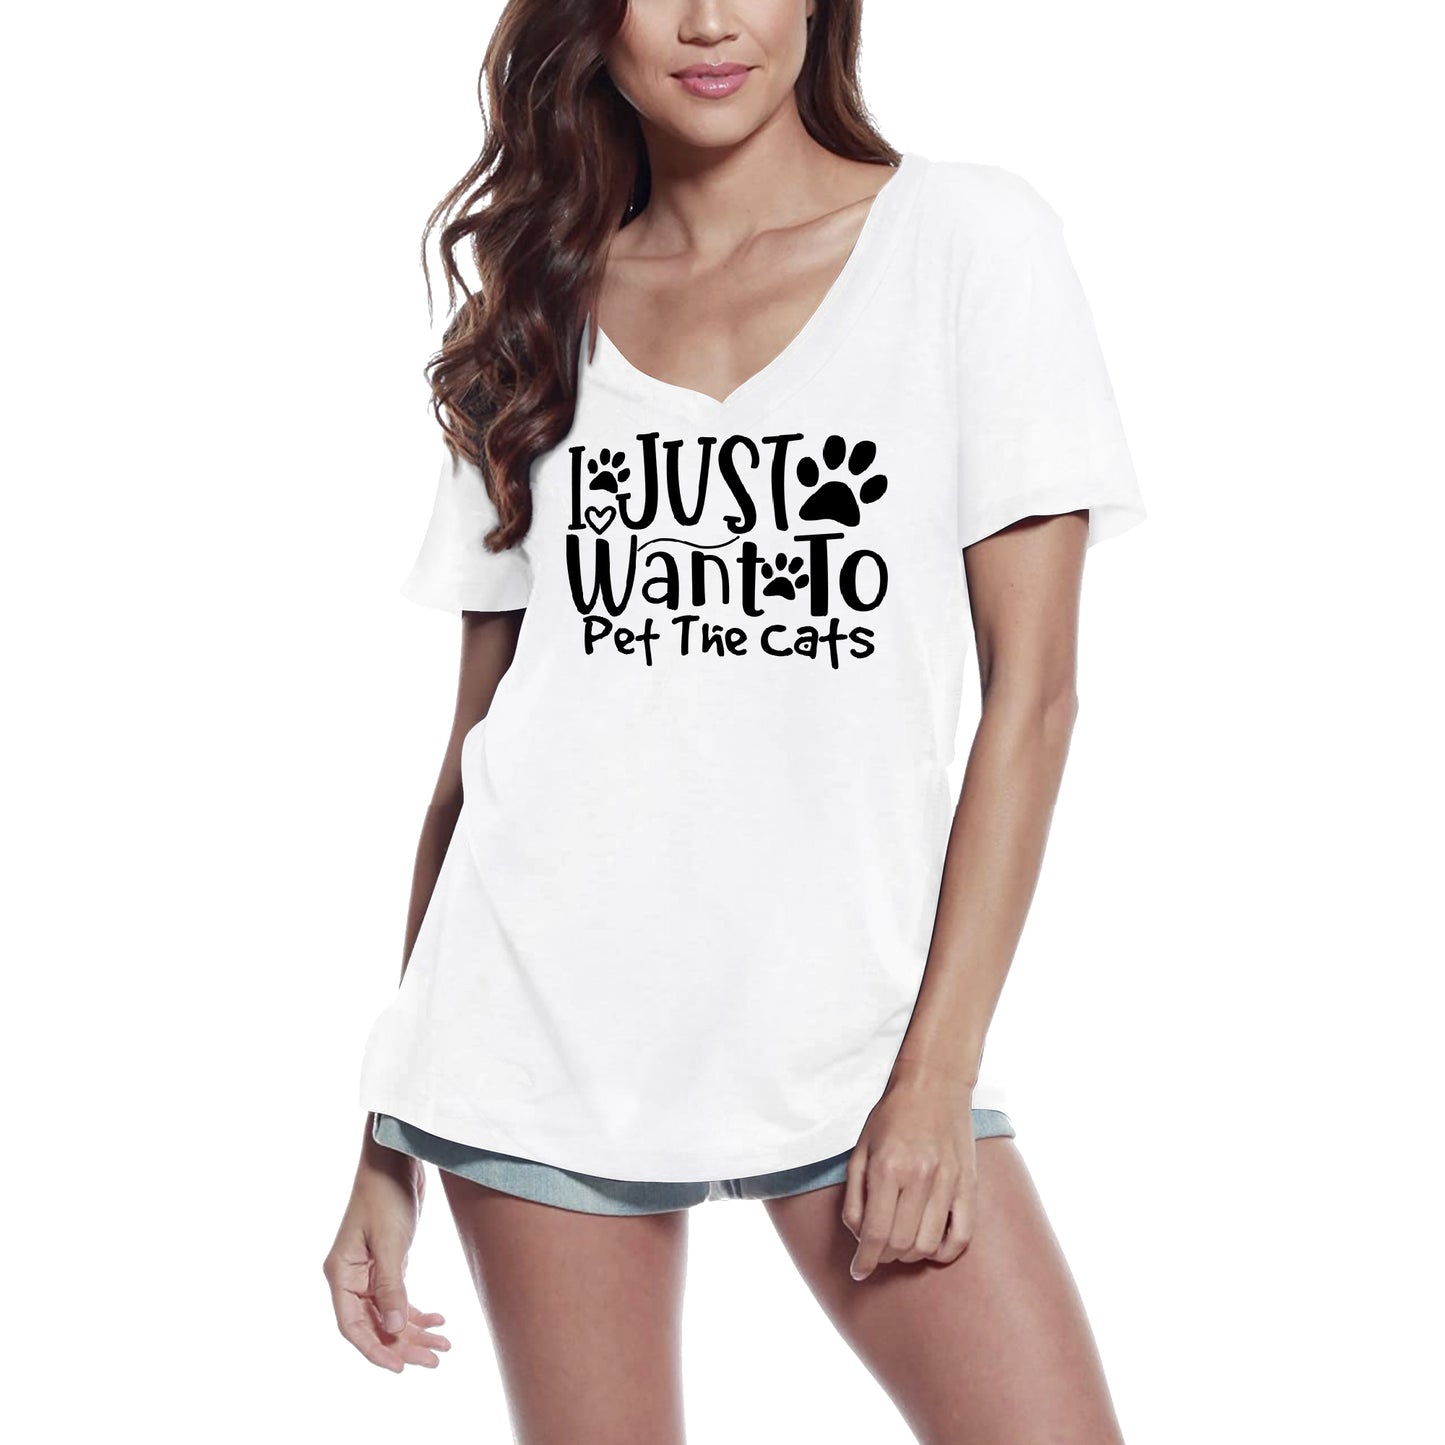 ULTRABASIC Women's T-Shirt I Just Want to Pet the Cats - Short Sleeve Tee Shirt Tops